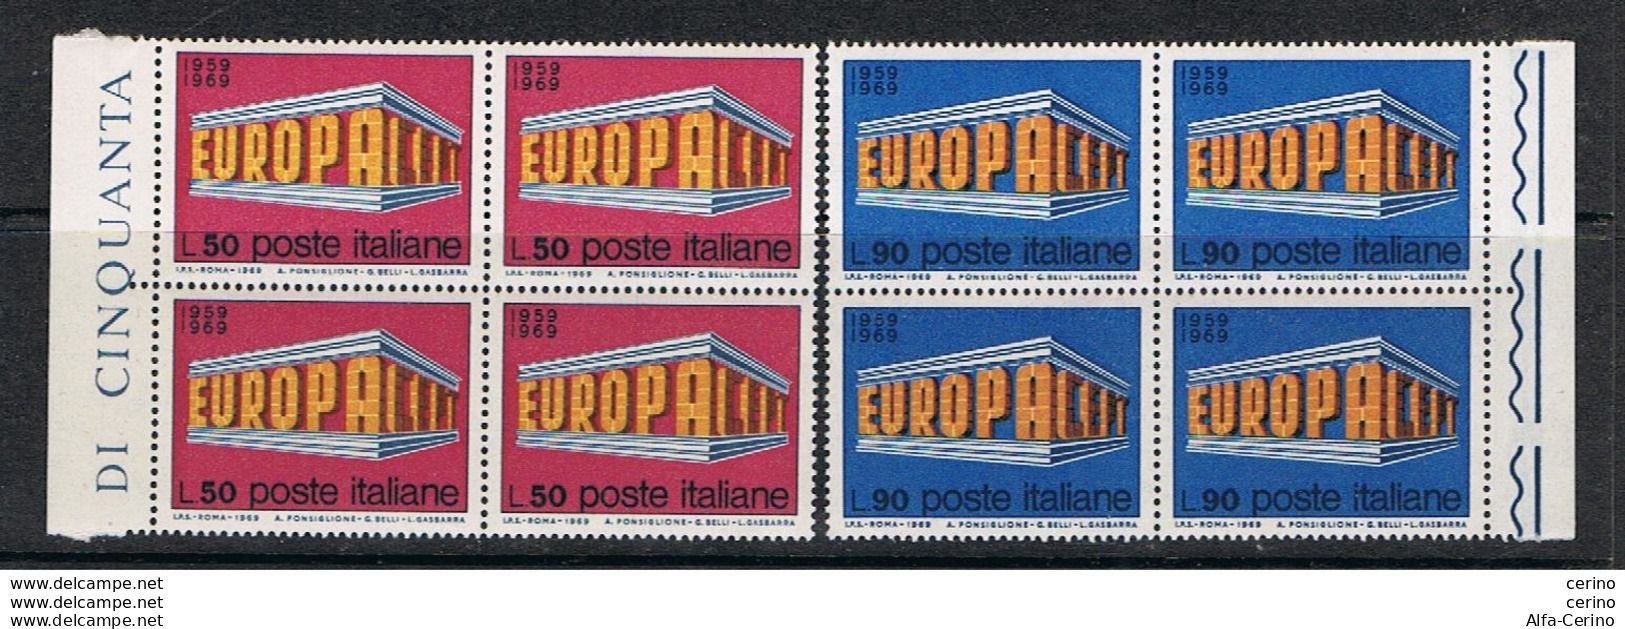 REPUBBLICA:  1969  IDEA  EUROPEA  -  S. CPL. 2  VAL. BL. 4  N. -  SASS. 1109/10 - 1969